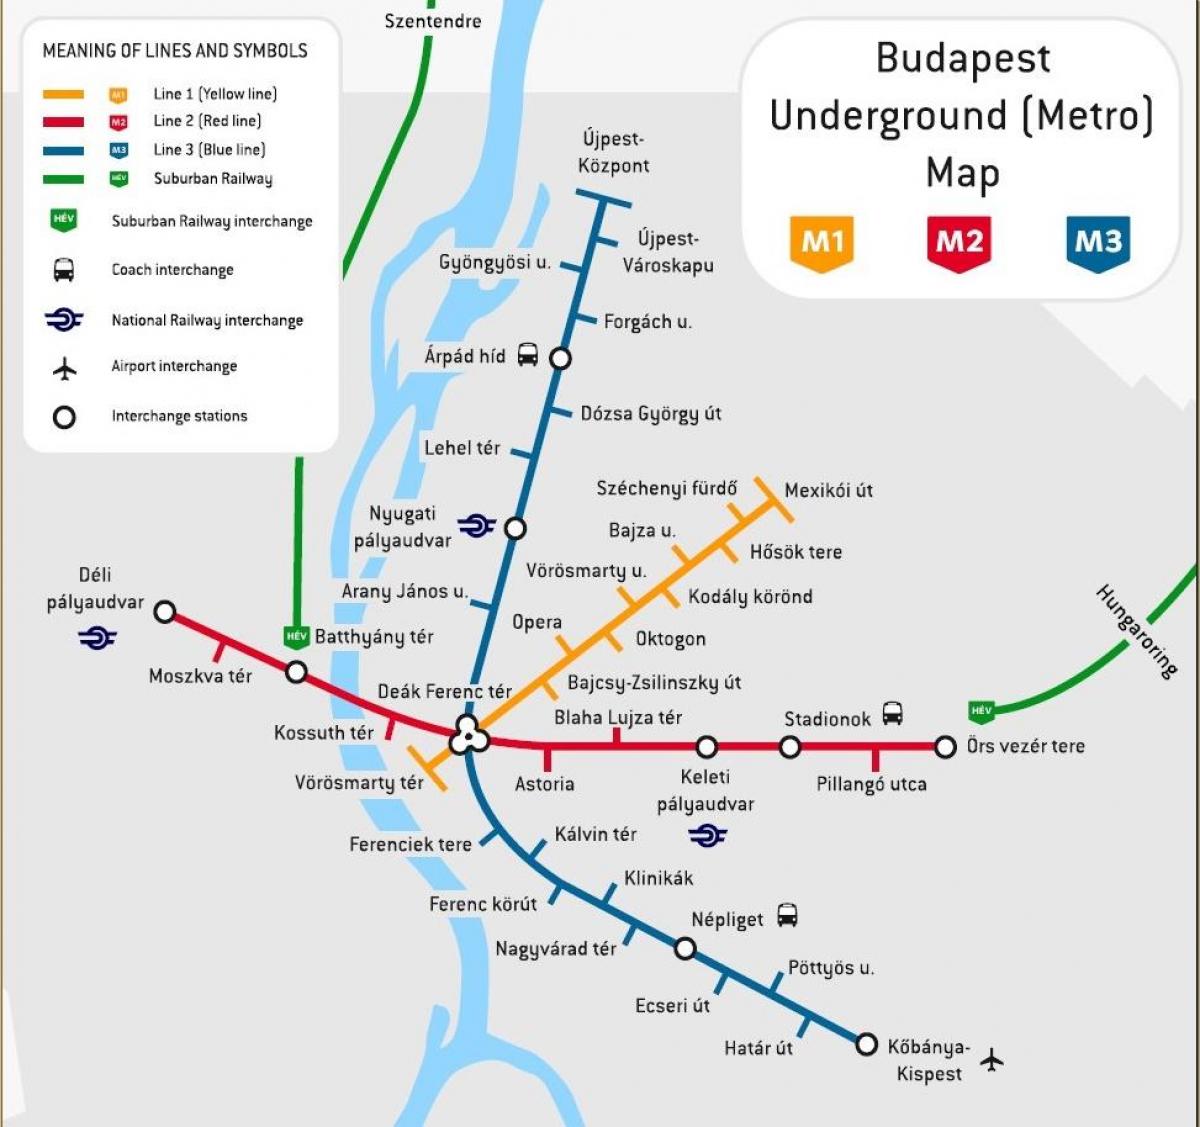 железнодорожный вокзал Будапешта на карте 